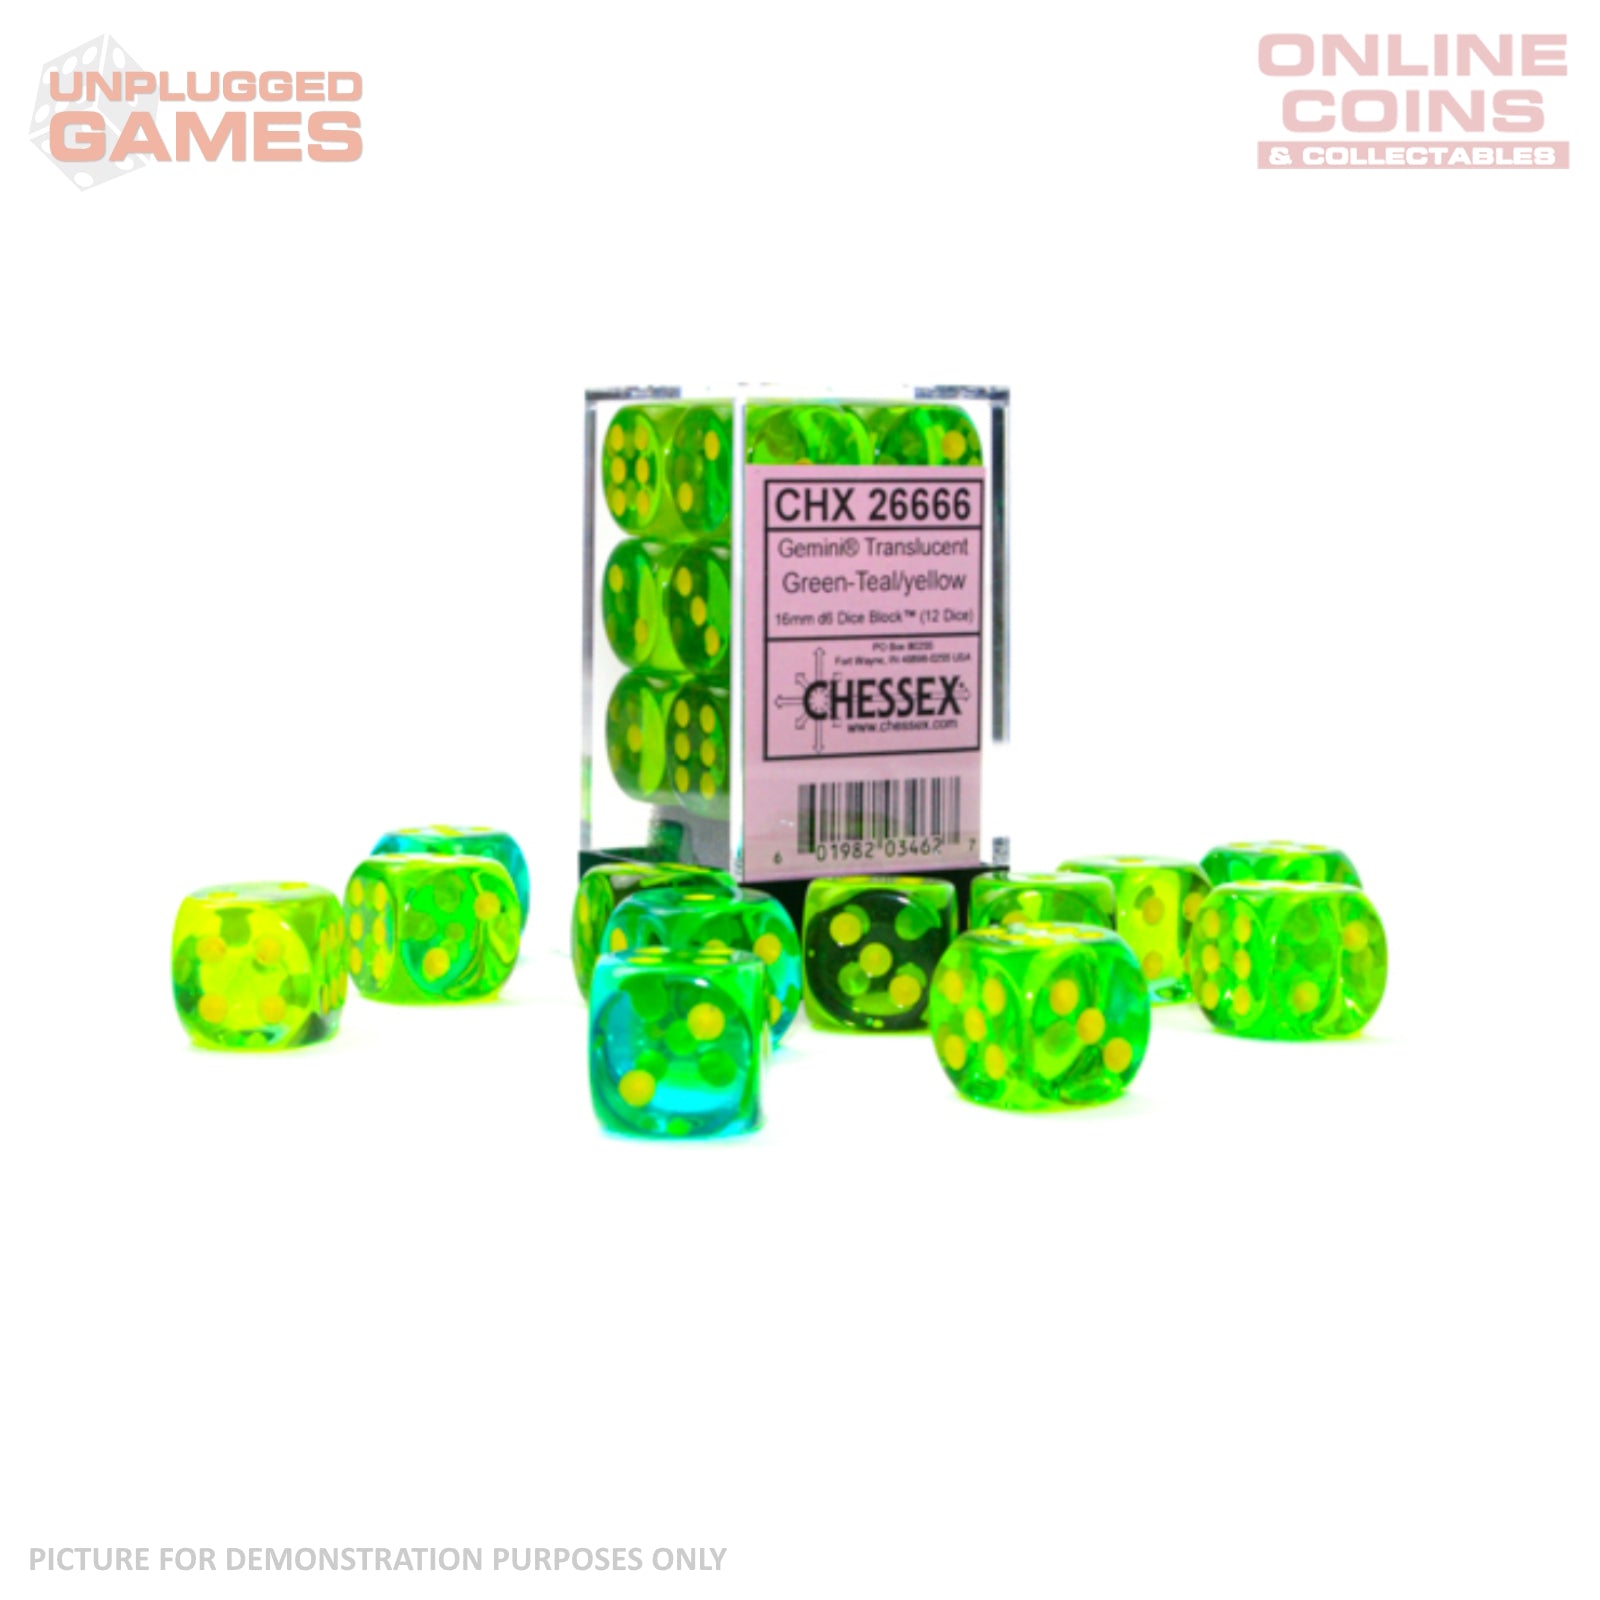 CHESSEX D6 Dice 16mm (12) - Gemini Translucent Green-Teal/Yellow Block